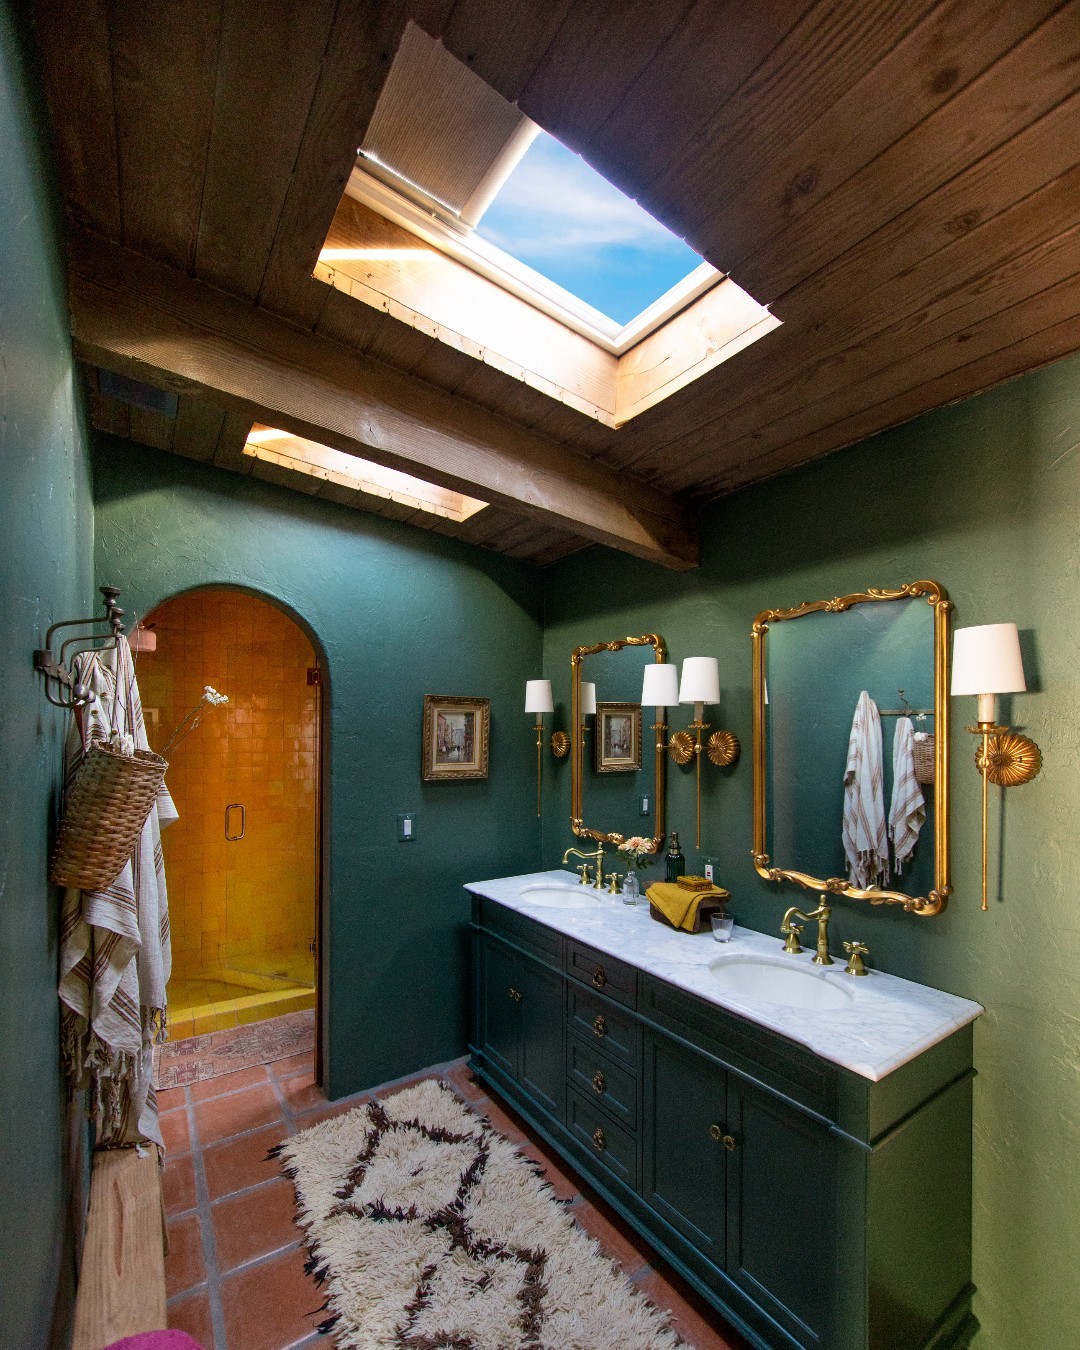 Jade Bathroom: Rustic Elegance with Verdant Flair